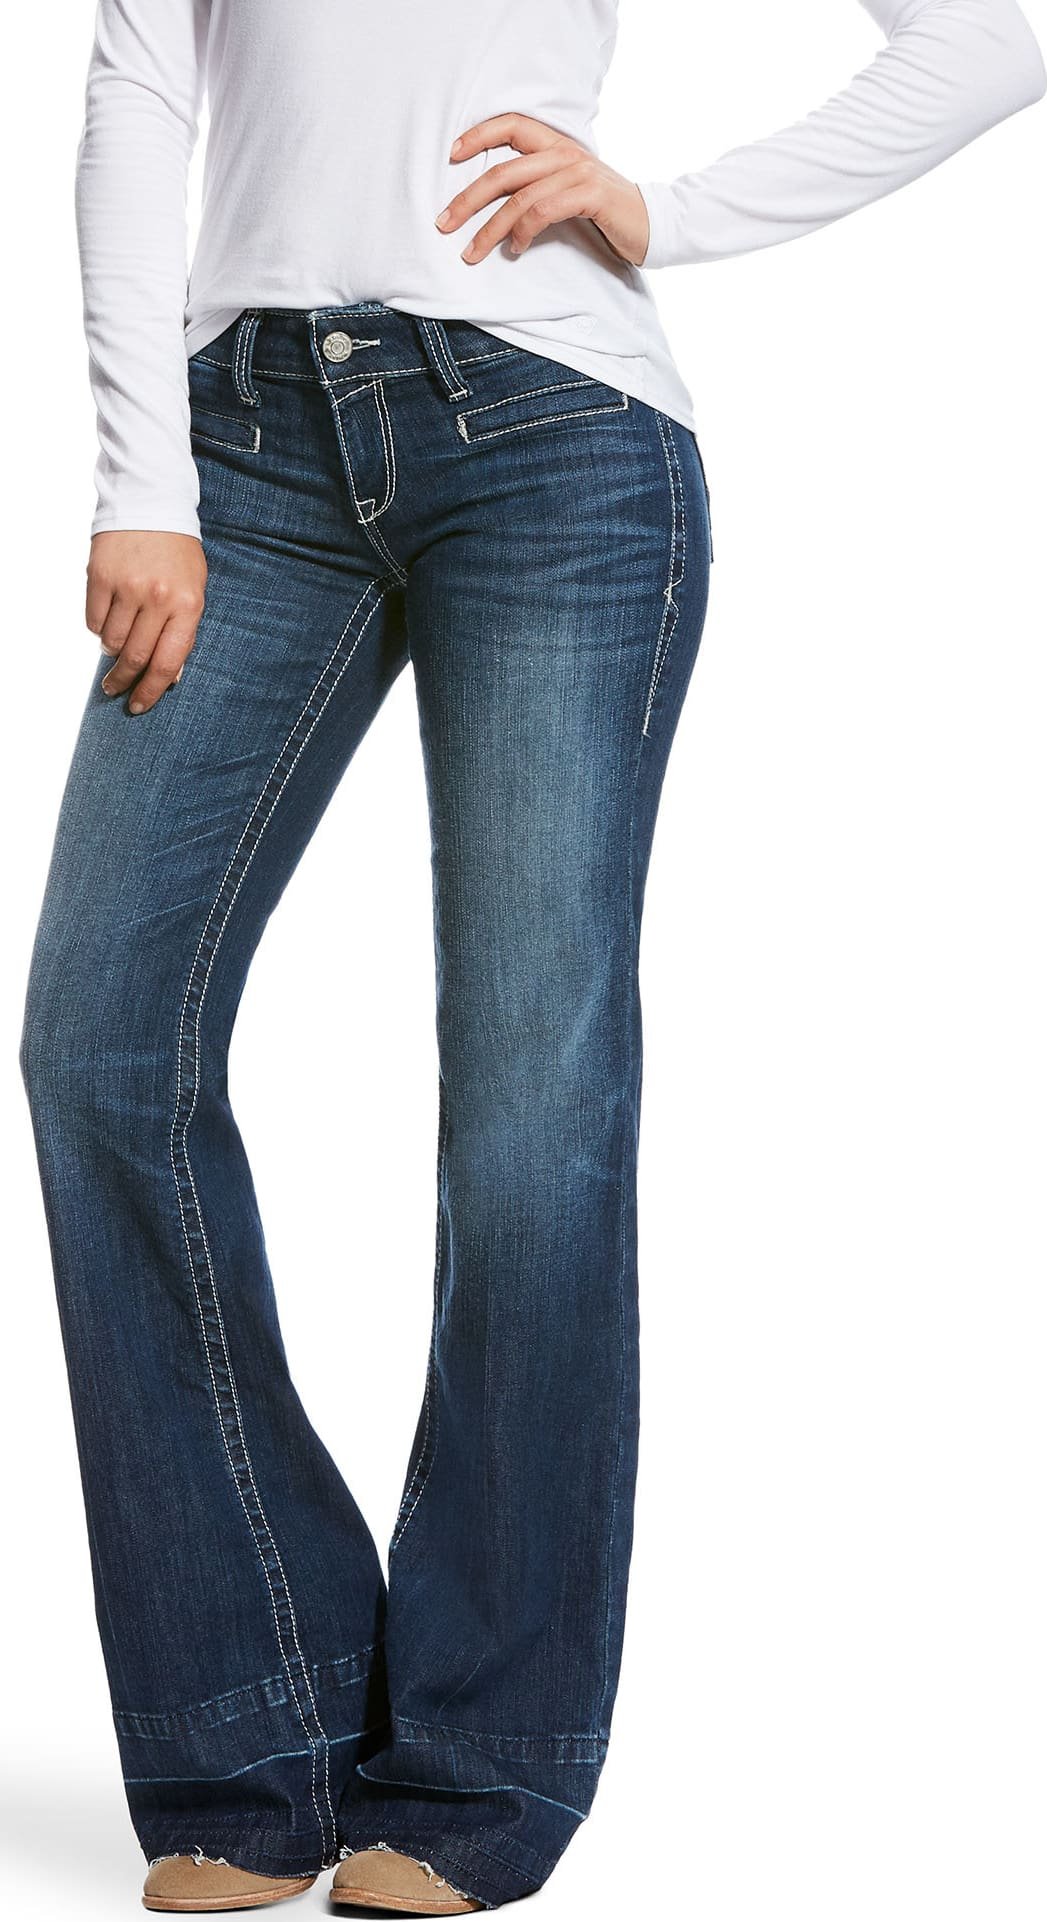 trouser jeans